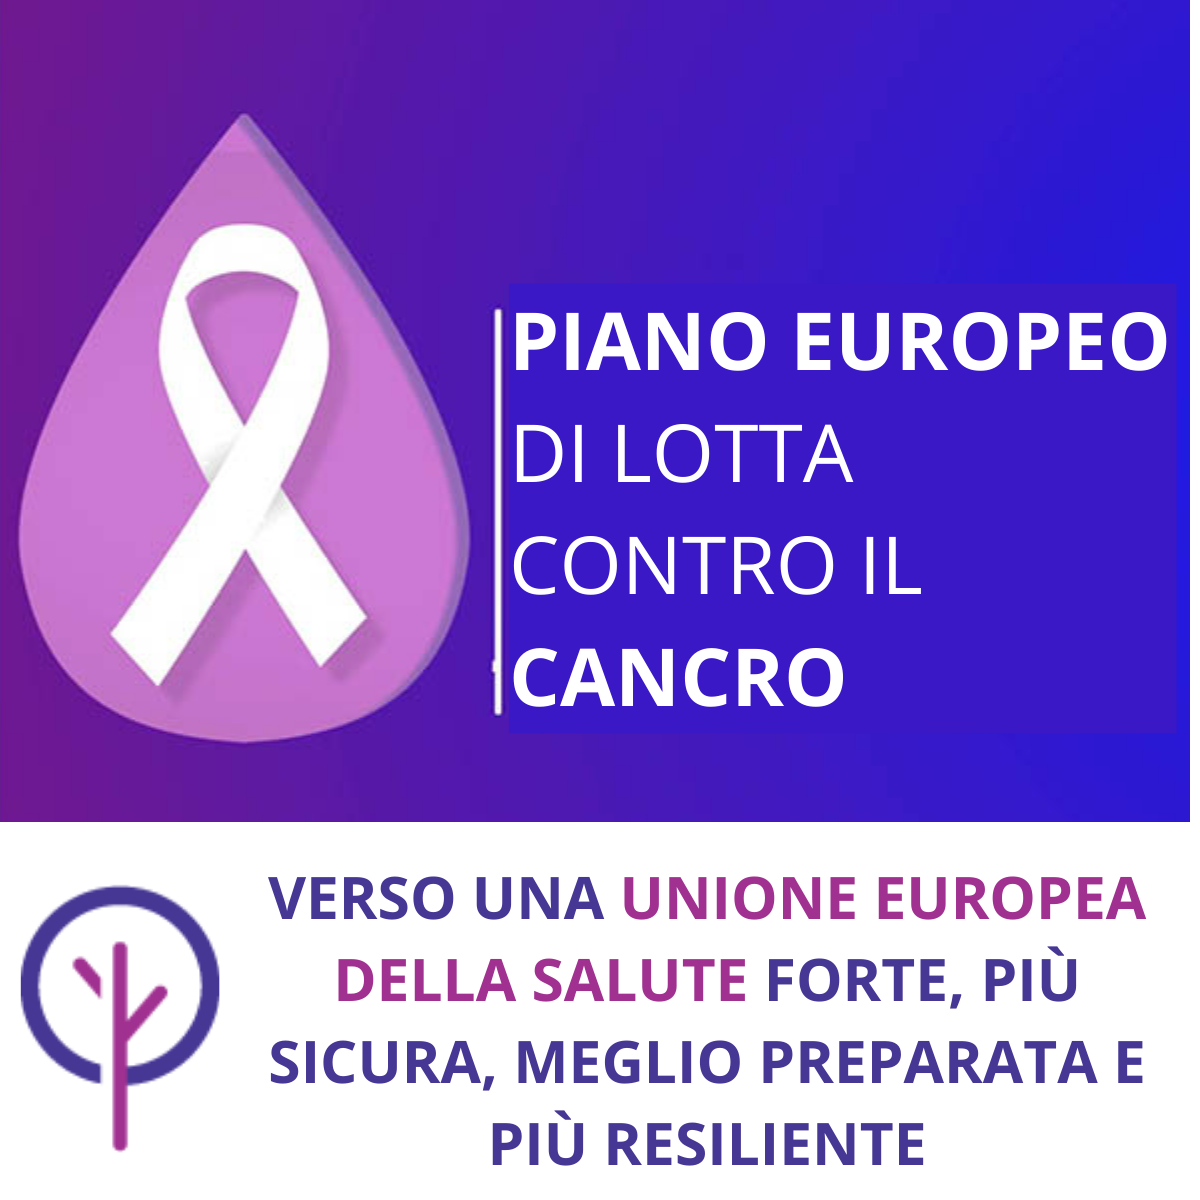 Piano europeo contro il cancro - Knowandbe.live